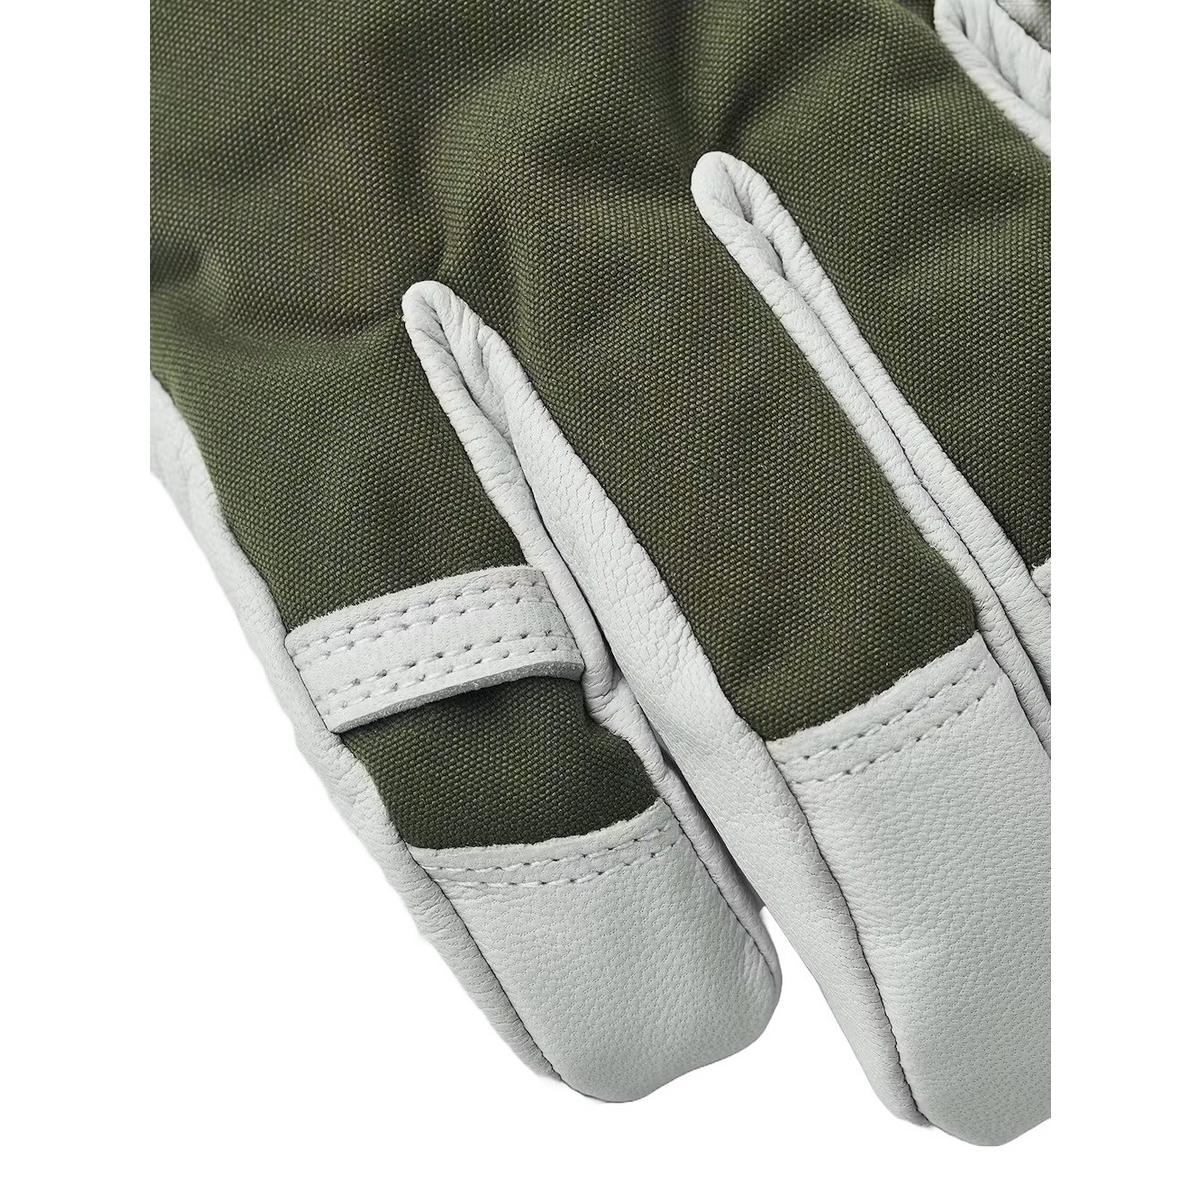 Hestra Men's Army Leather Heli Ski Gloves - Olive